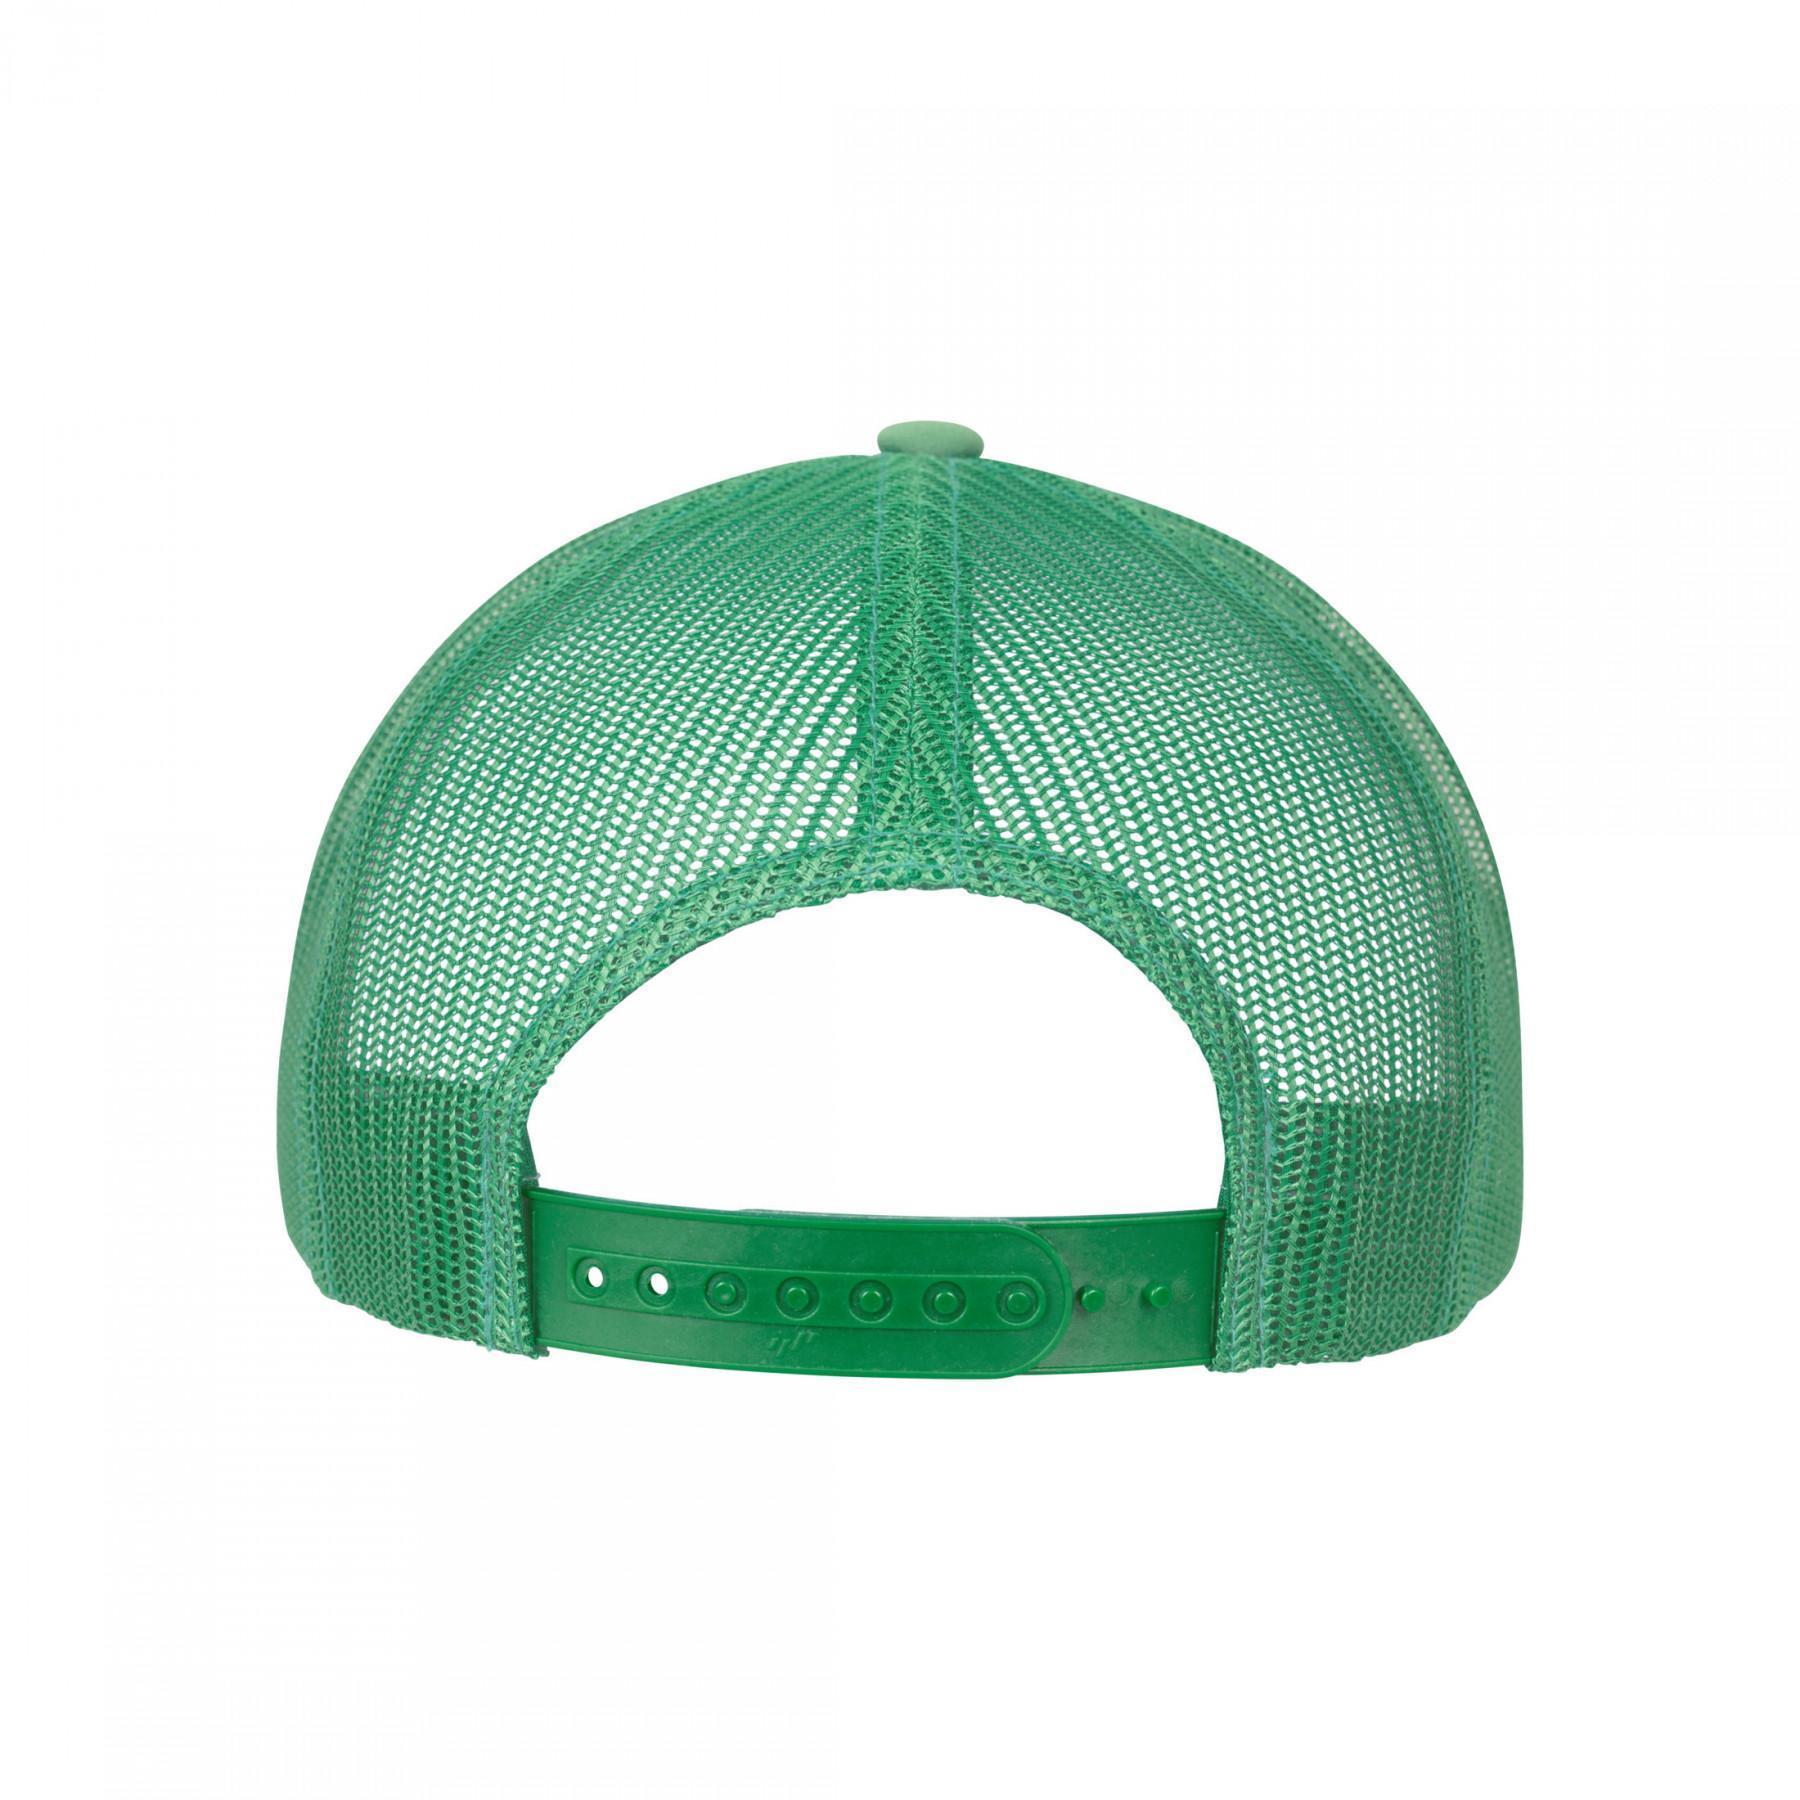 Kappe Flexfit foam curved visor